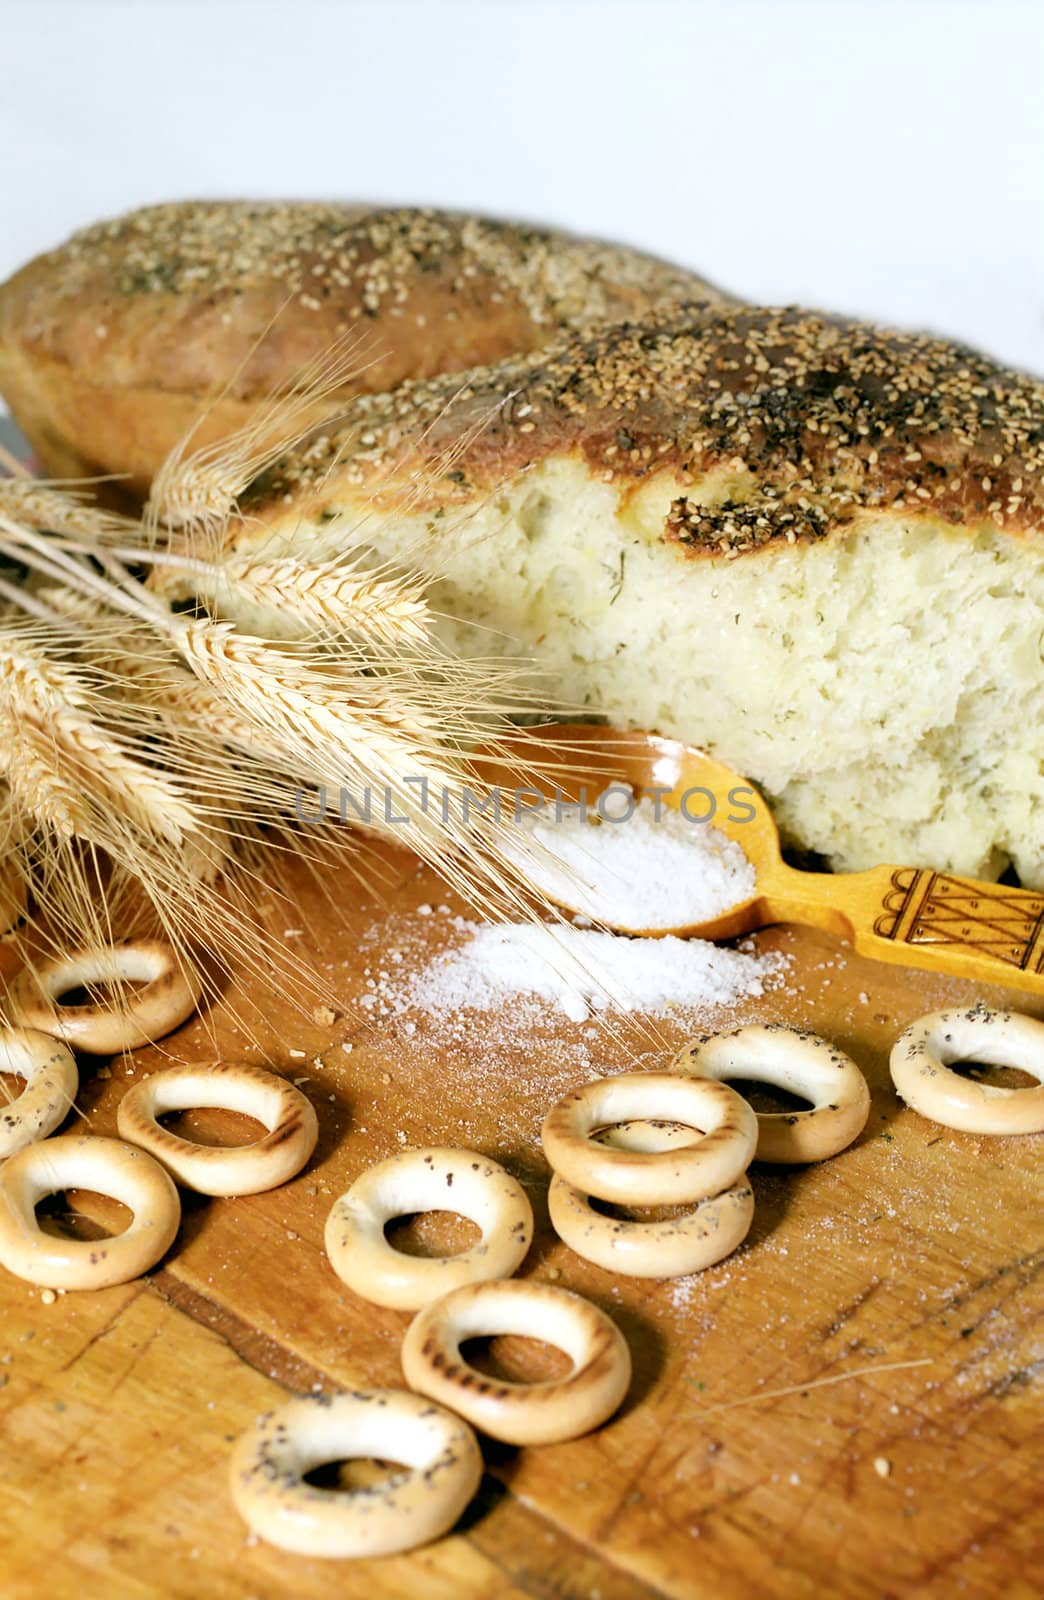 Broken loaf of bread by mulden